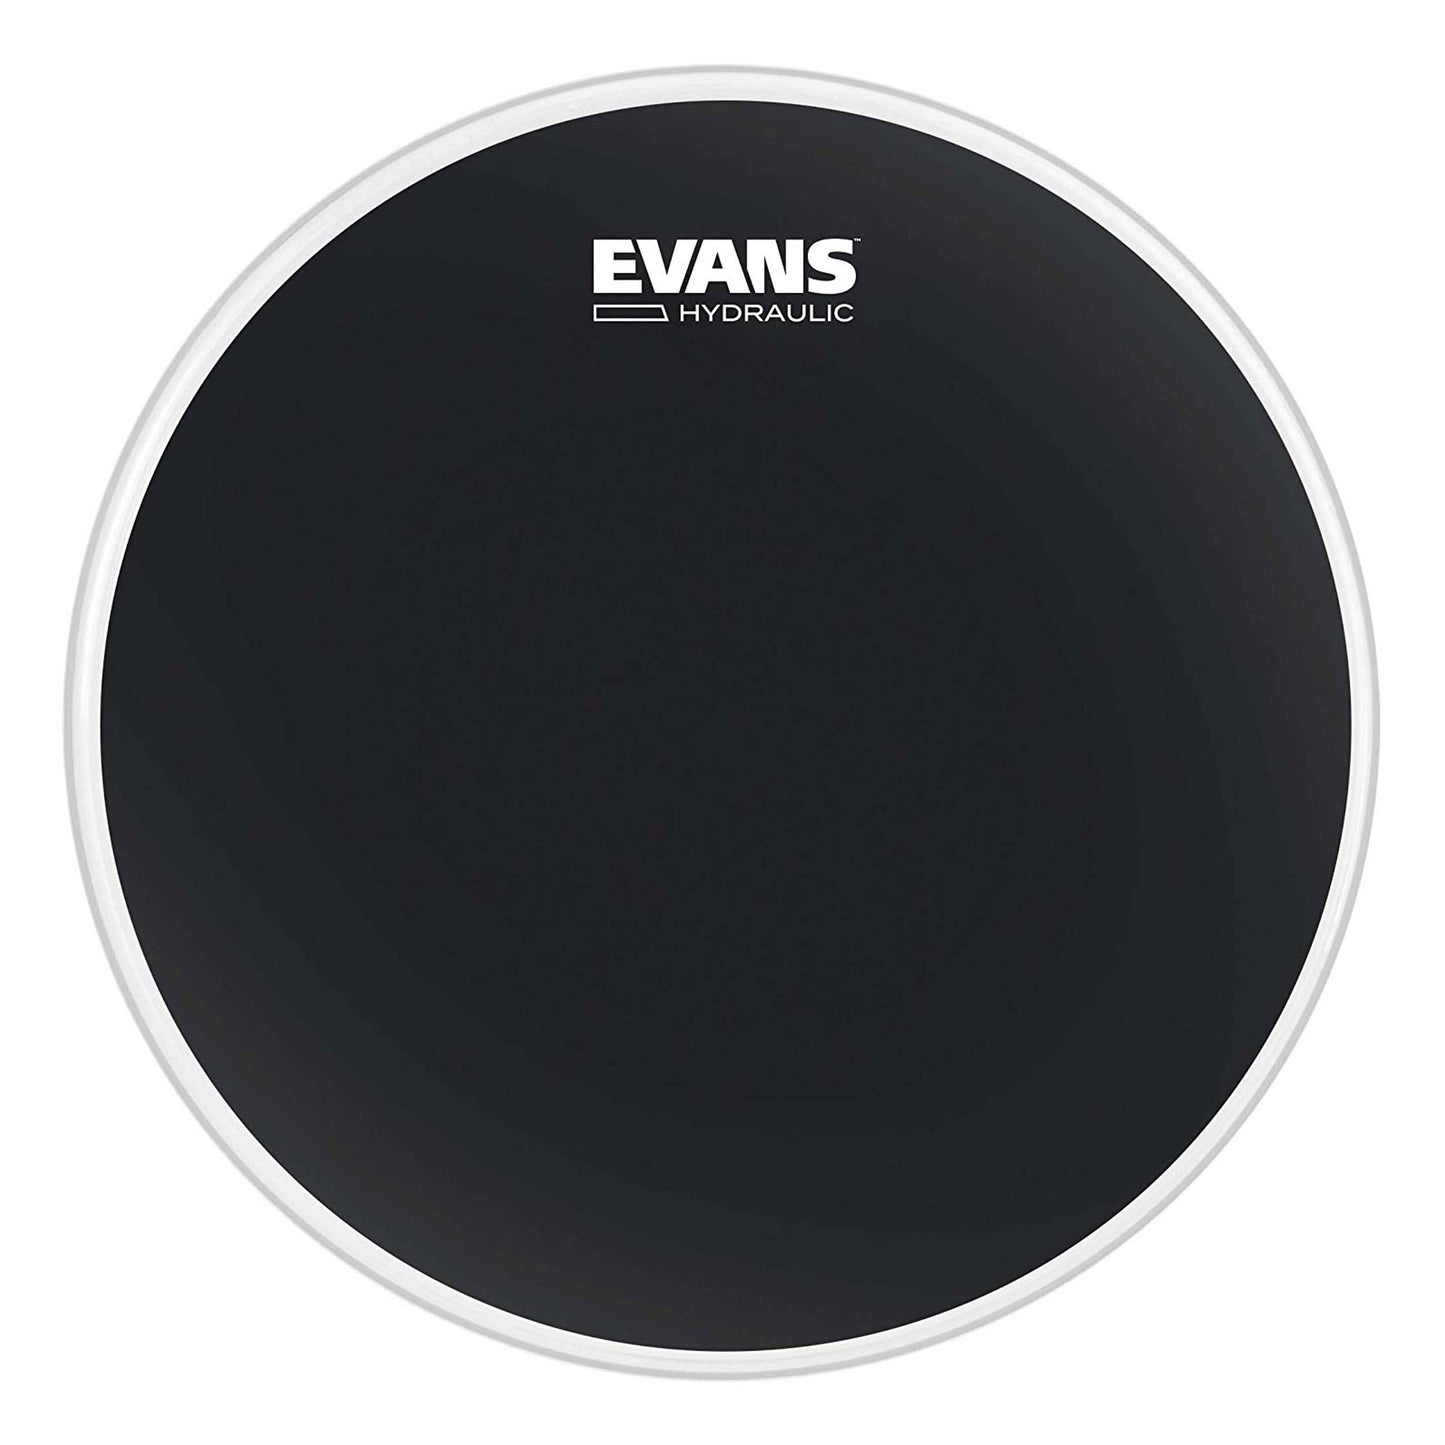 Evans Black Hydraulic Bass Drum Head - 22"